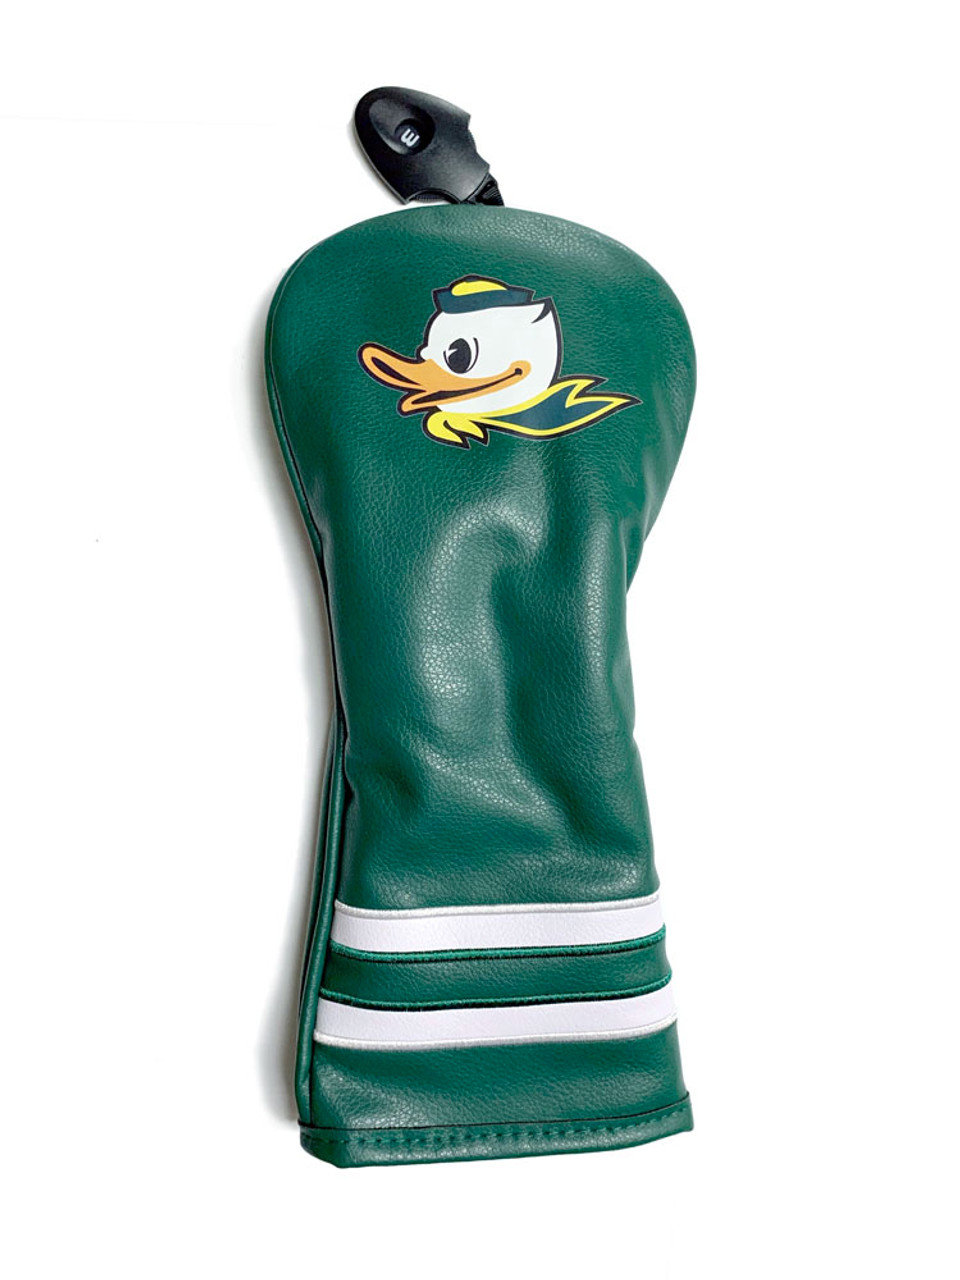 Team Golf Oregon Ducks Fighting Duck Gift Set (Towel, Balls, Tees)